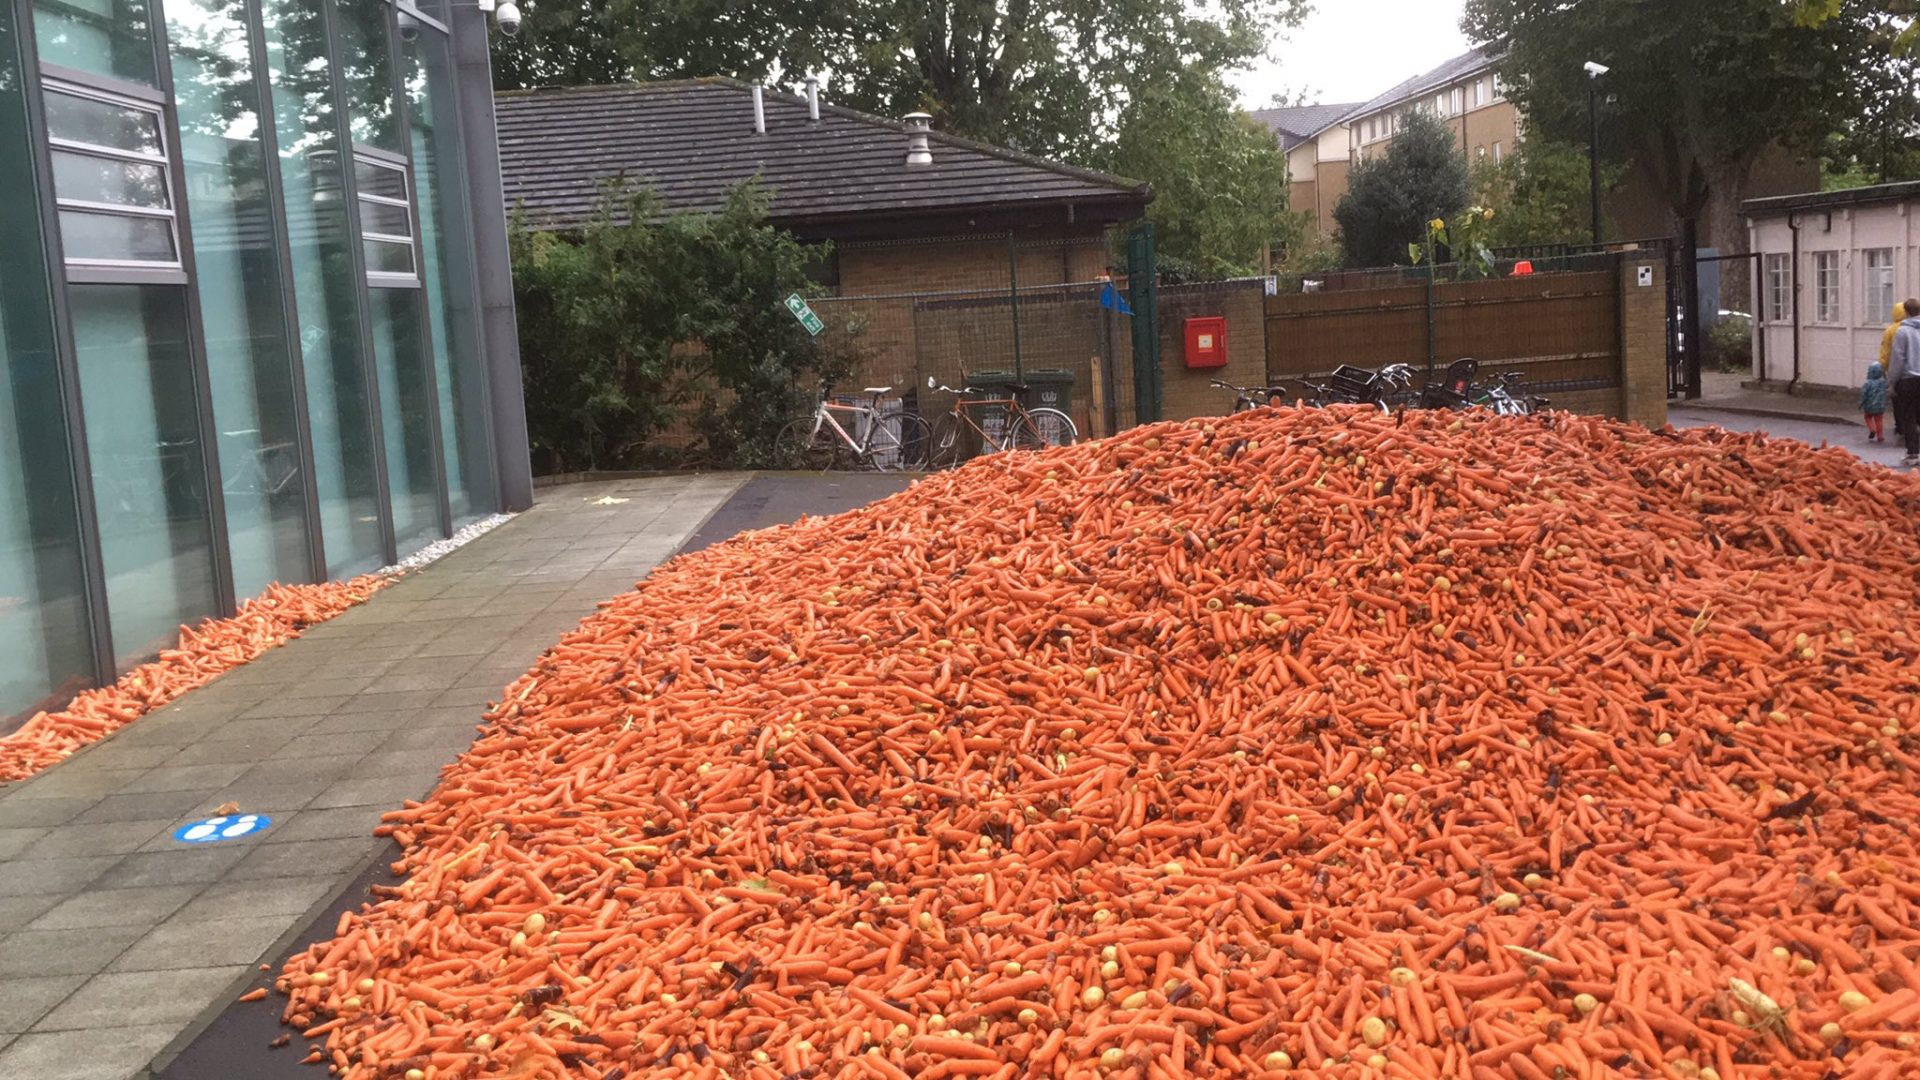 58,000 pounds of dumped carrots